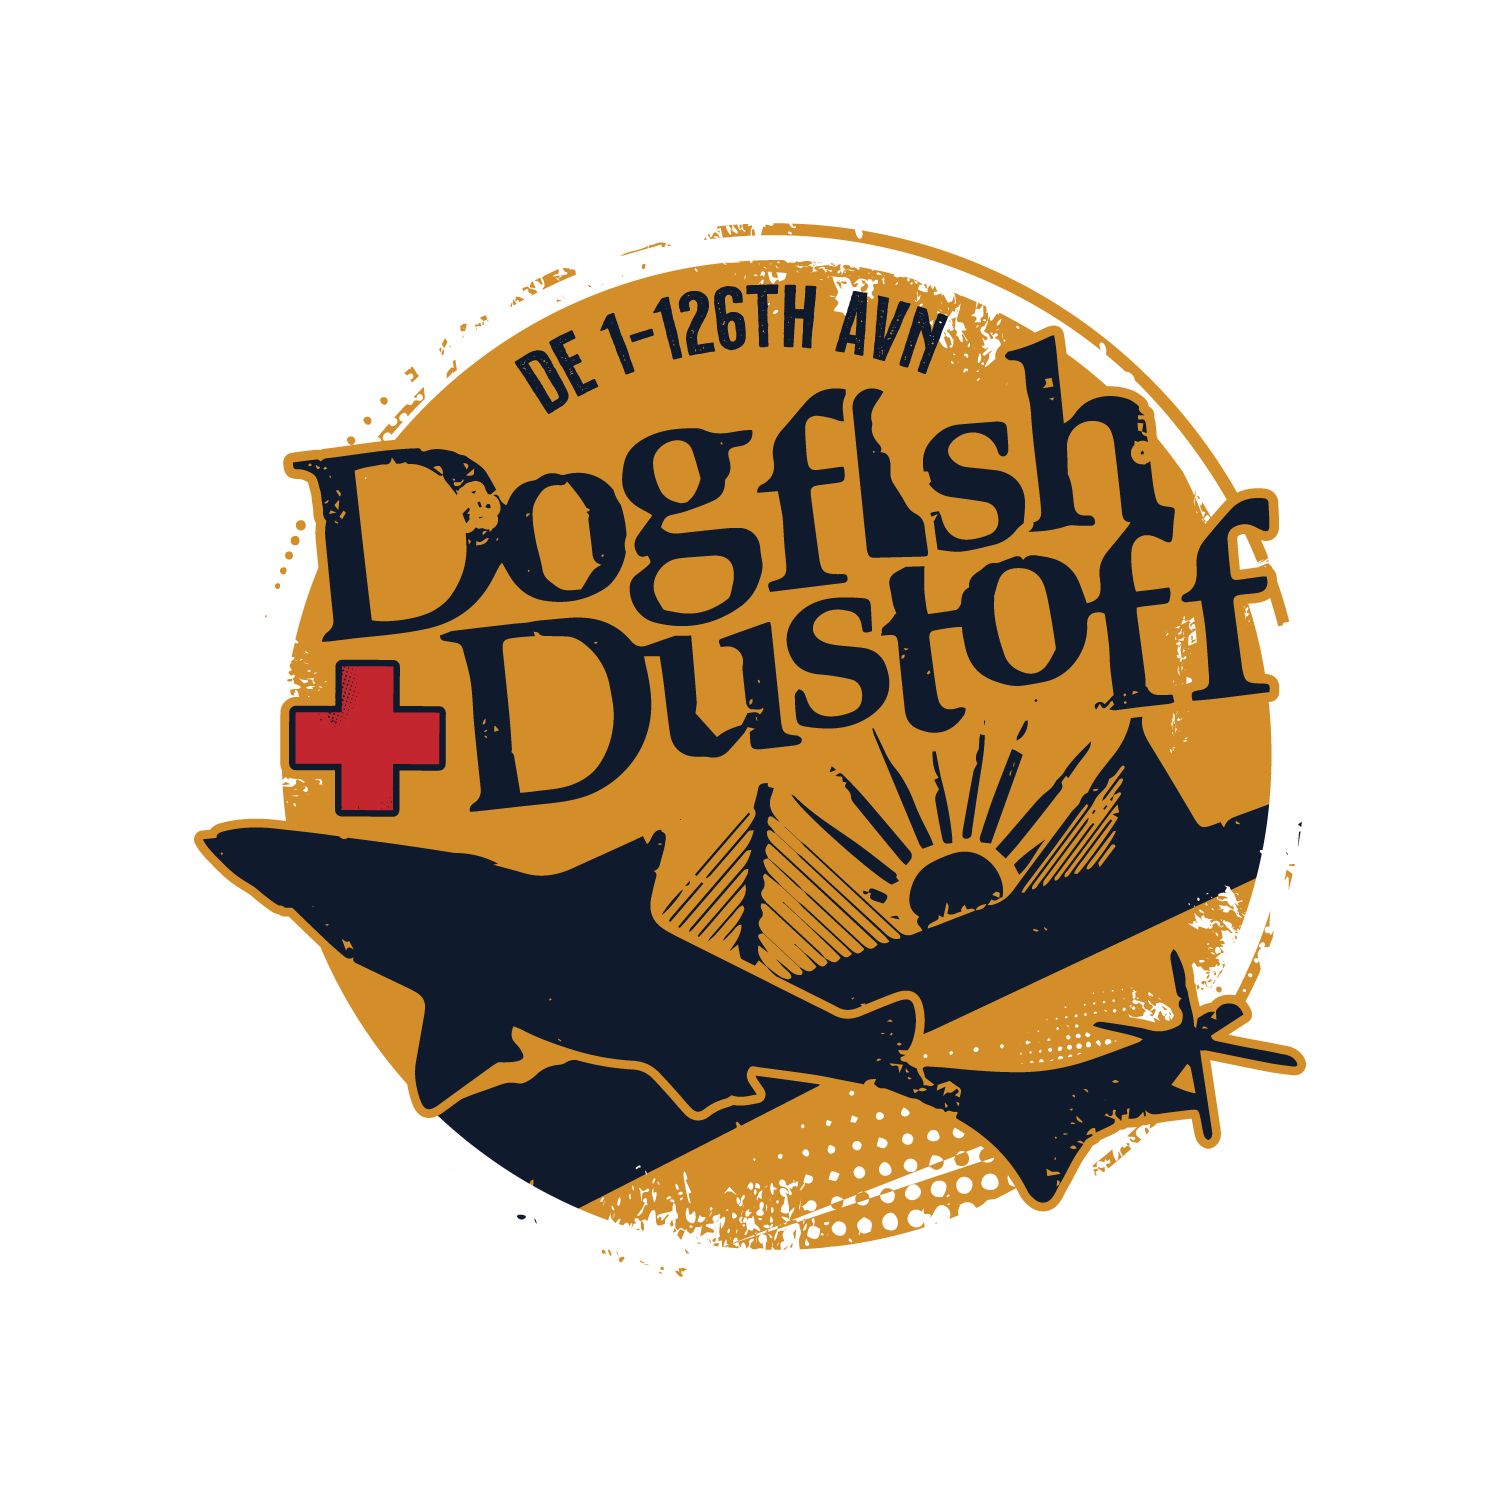 1-126 AVN "Dogfish Dustoff"